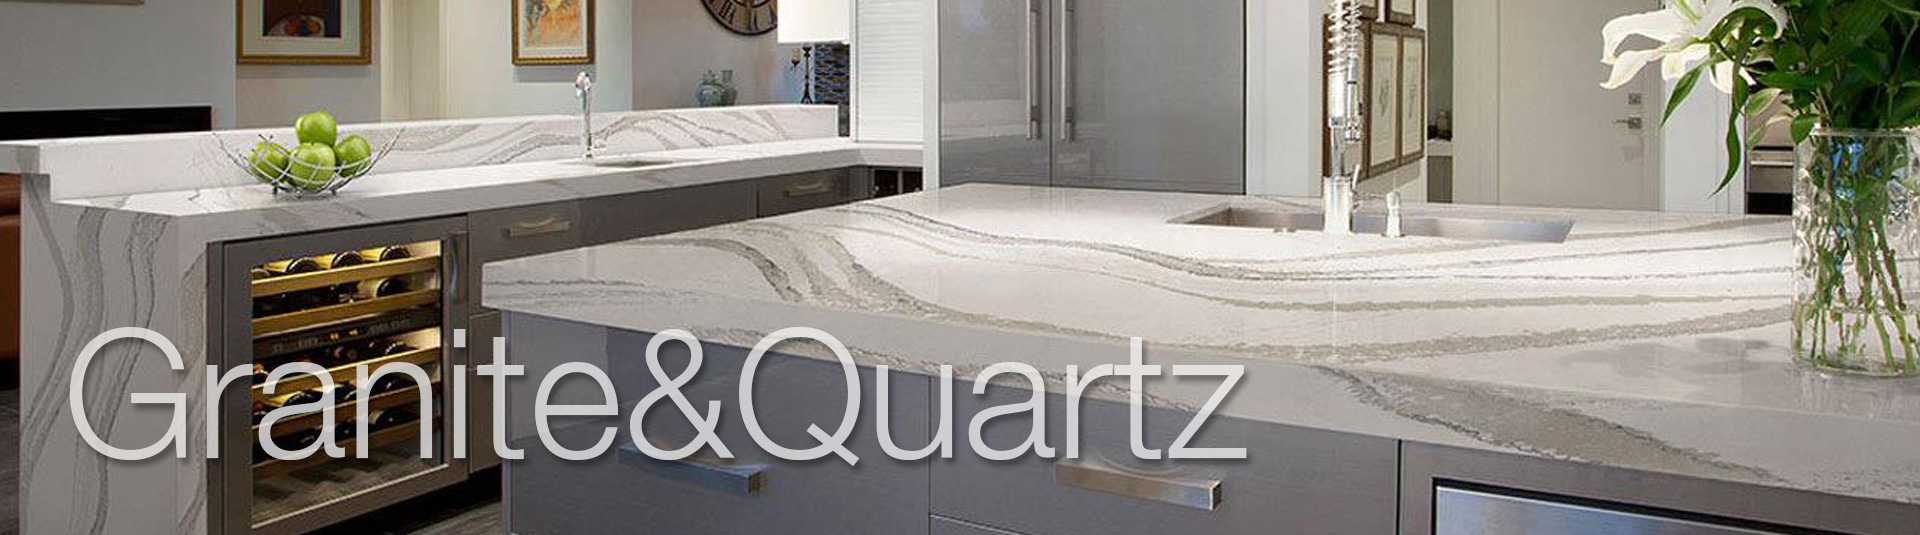 Granite & Quartz at Benson Stone Company; custom fabrication and low-price guarantee!